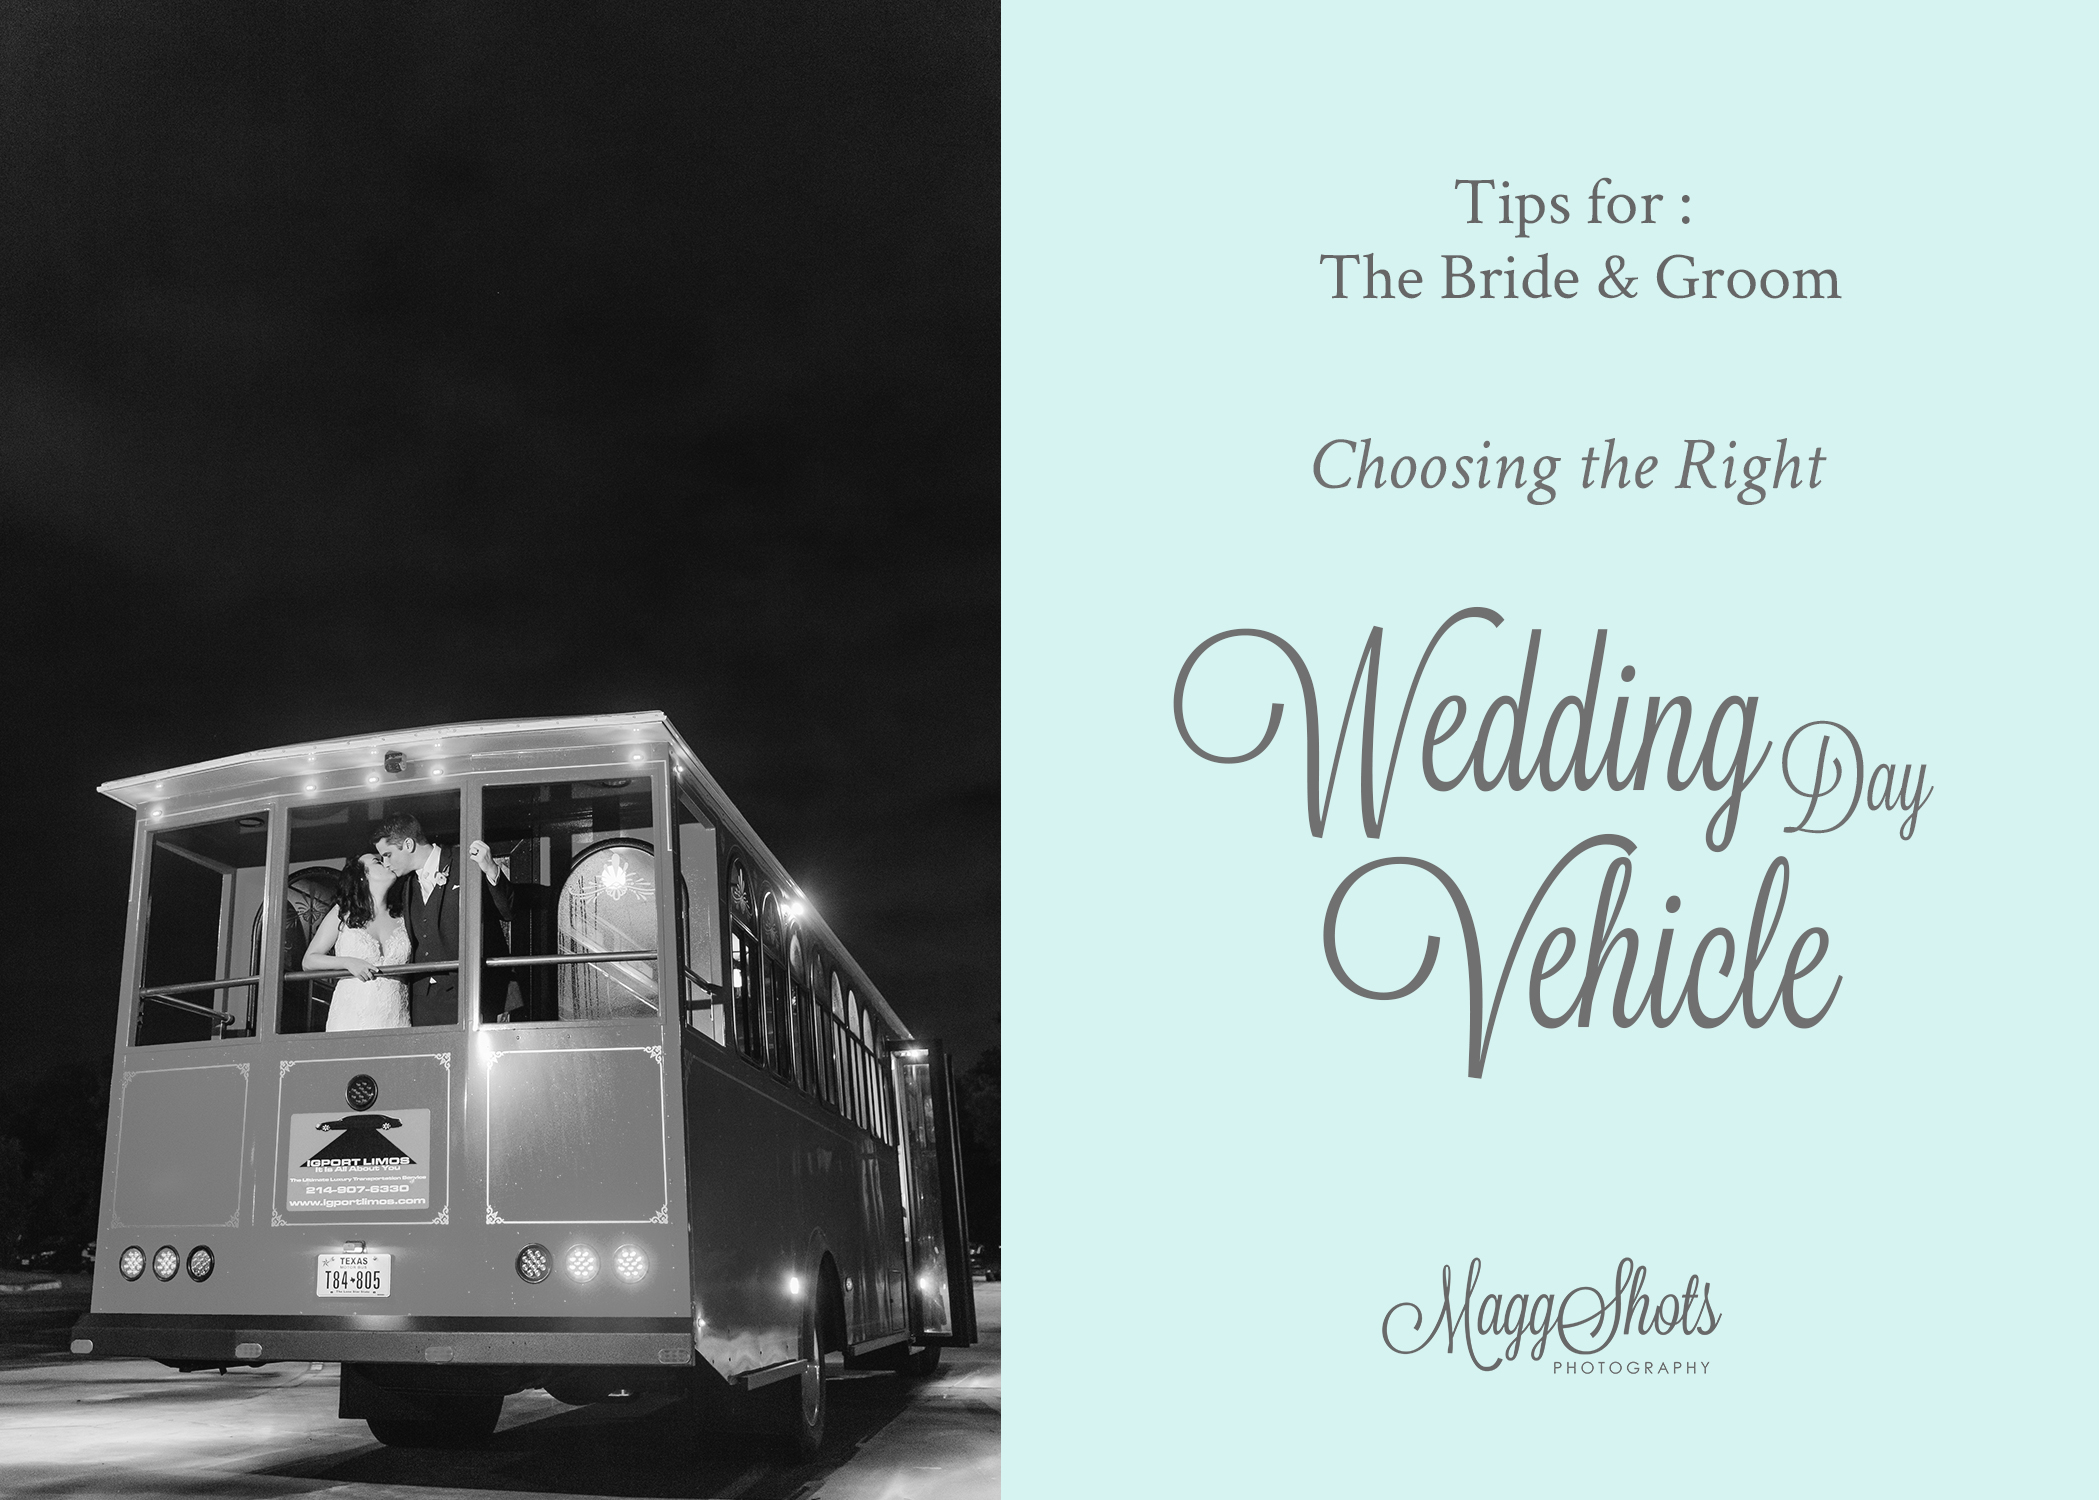 Choosing the Right Wedding Vehicle, trolley, dallas limo, dallas trolley, wedding day vehicle